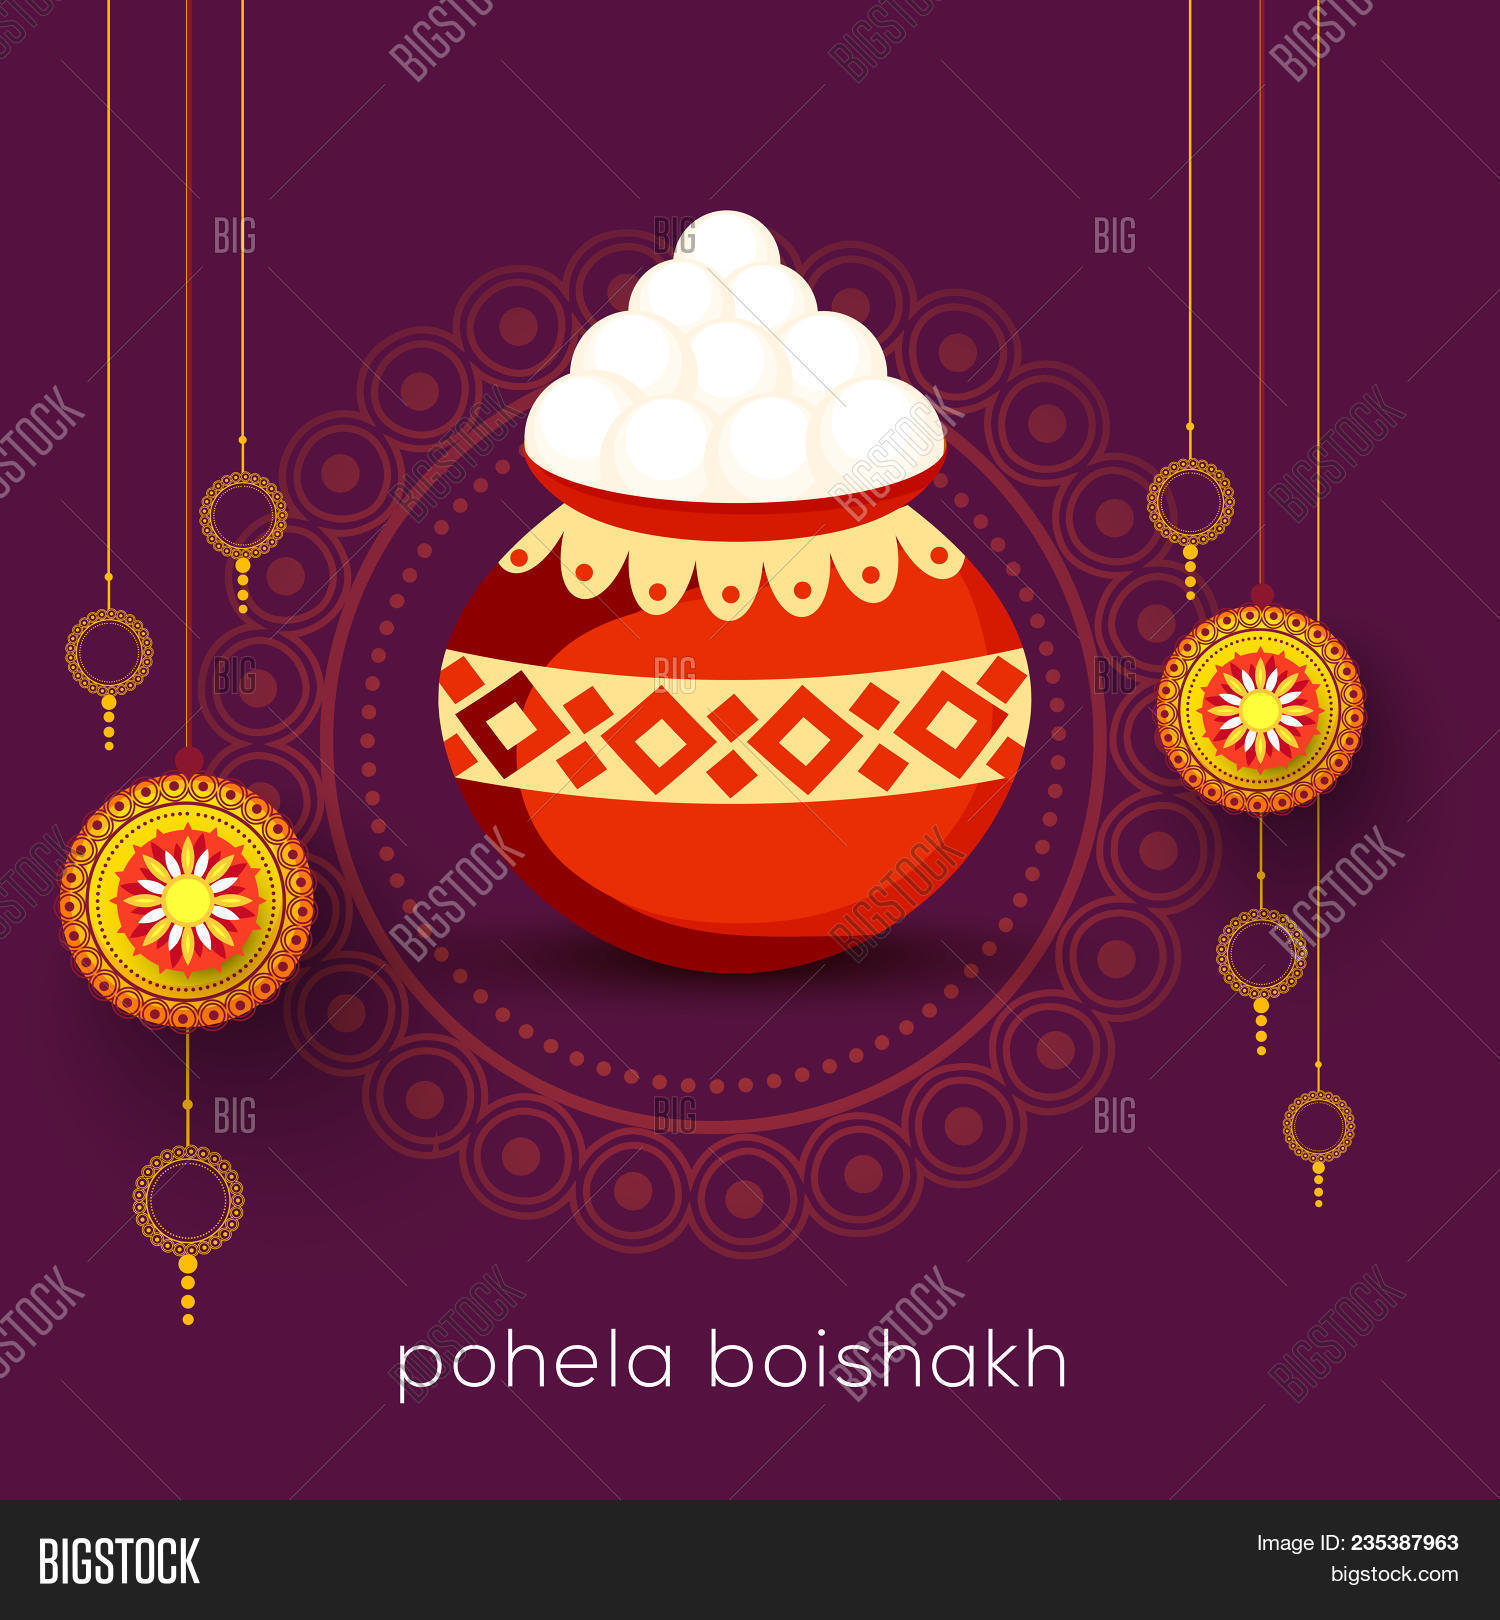 Bengali New Year Pôhela Boishakh Greetings - HD Wallpaper 